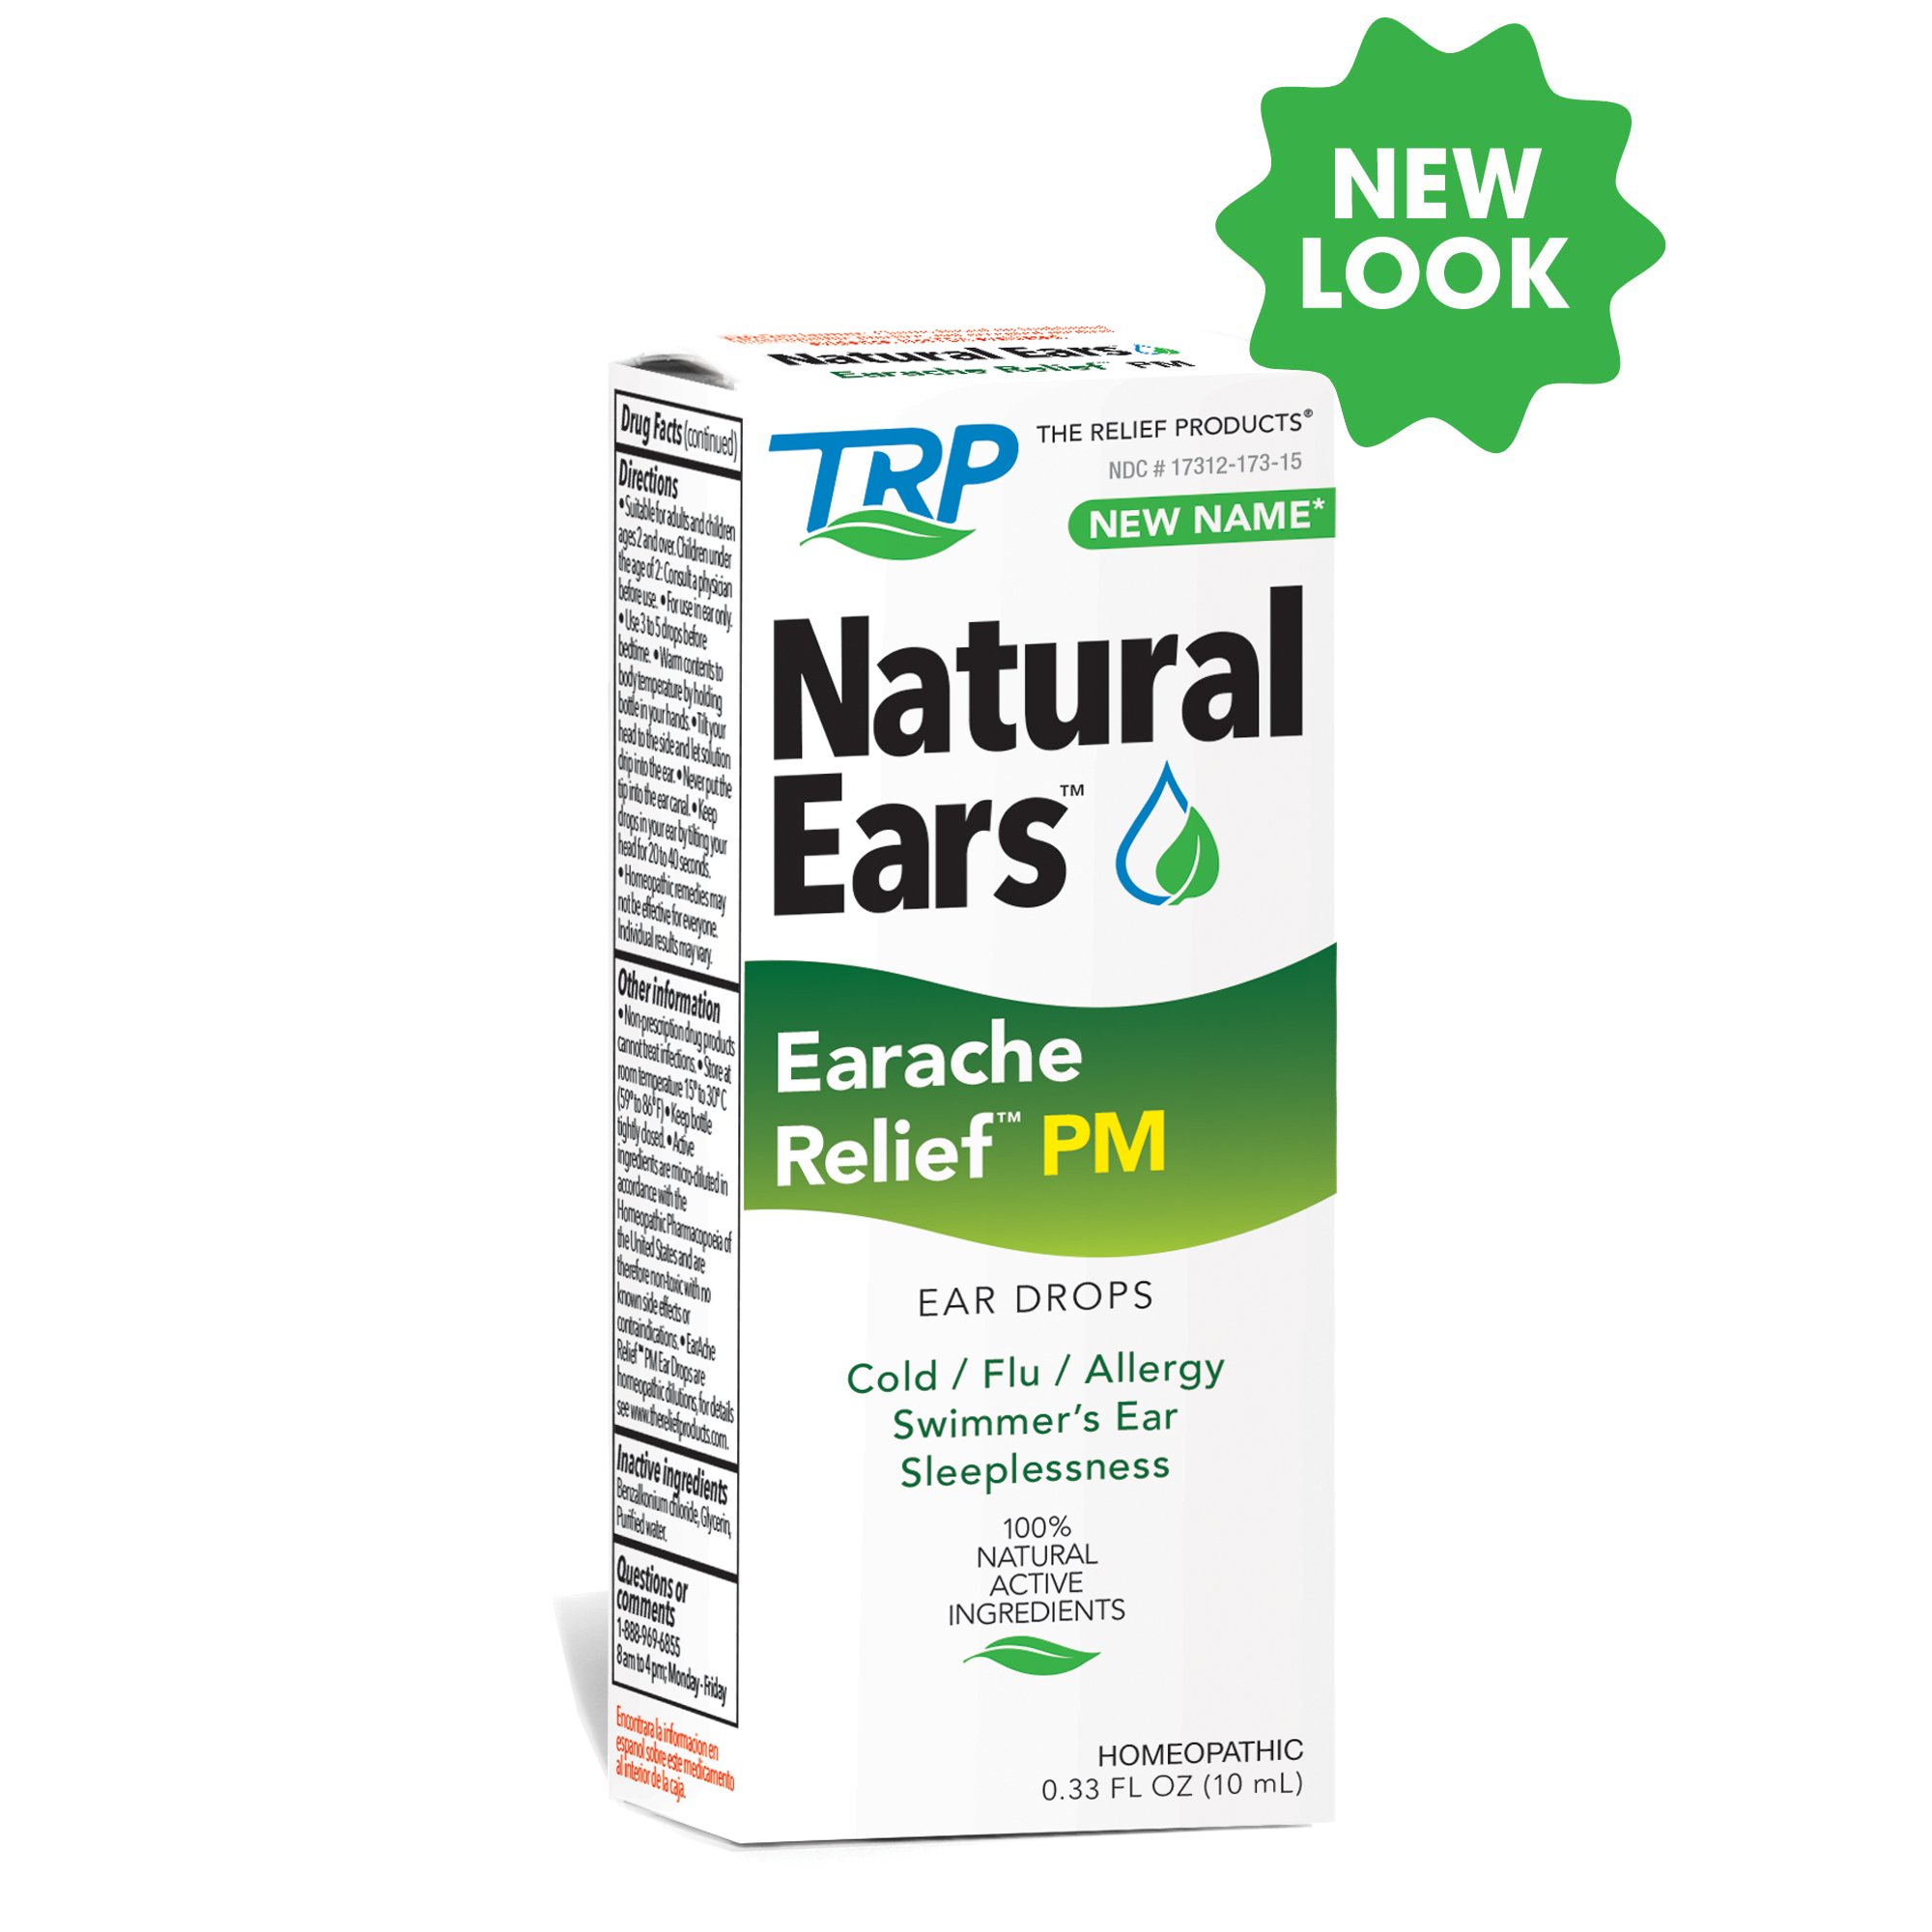 Ear Ache Relief PM Ear Drops